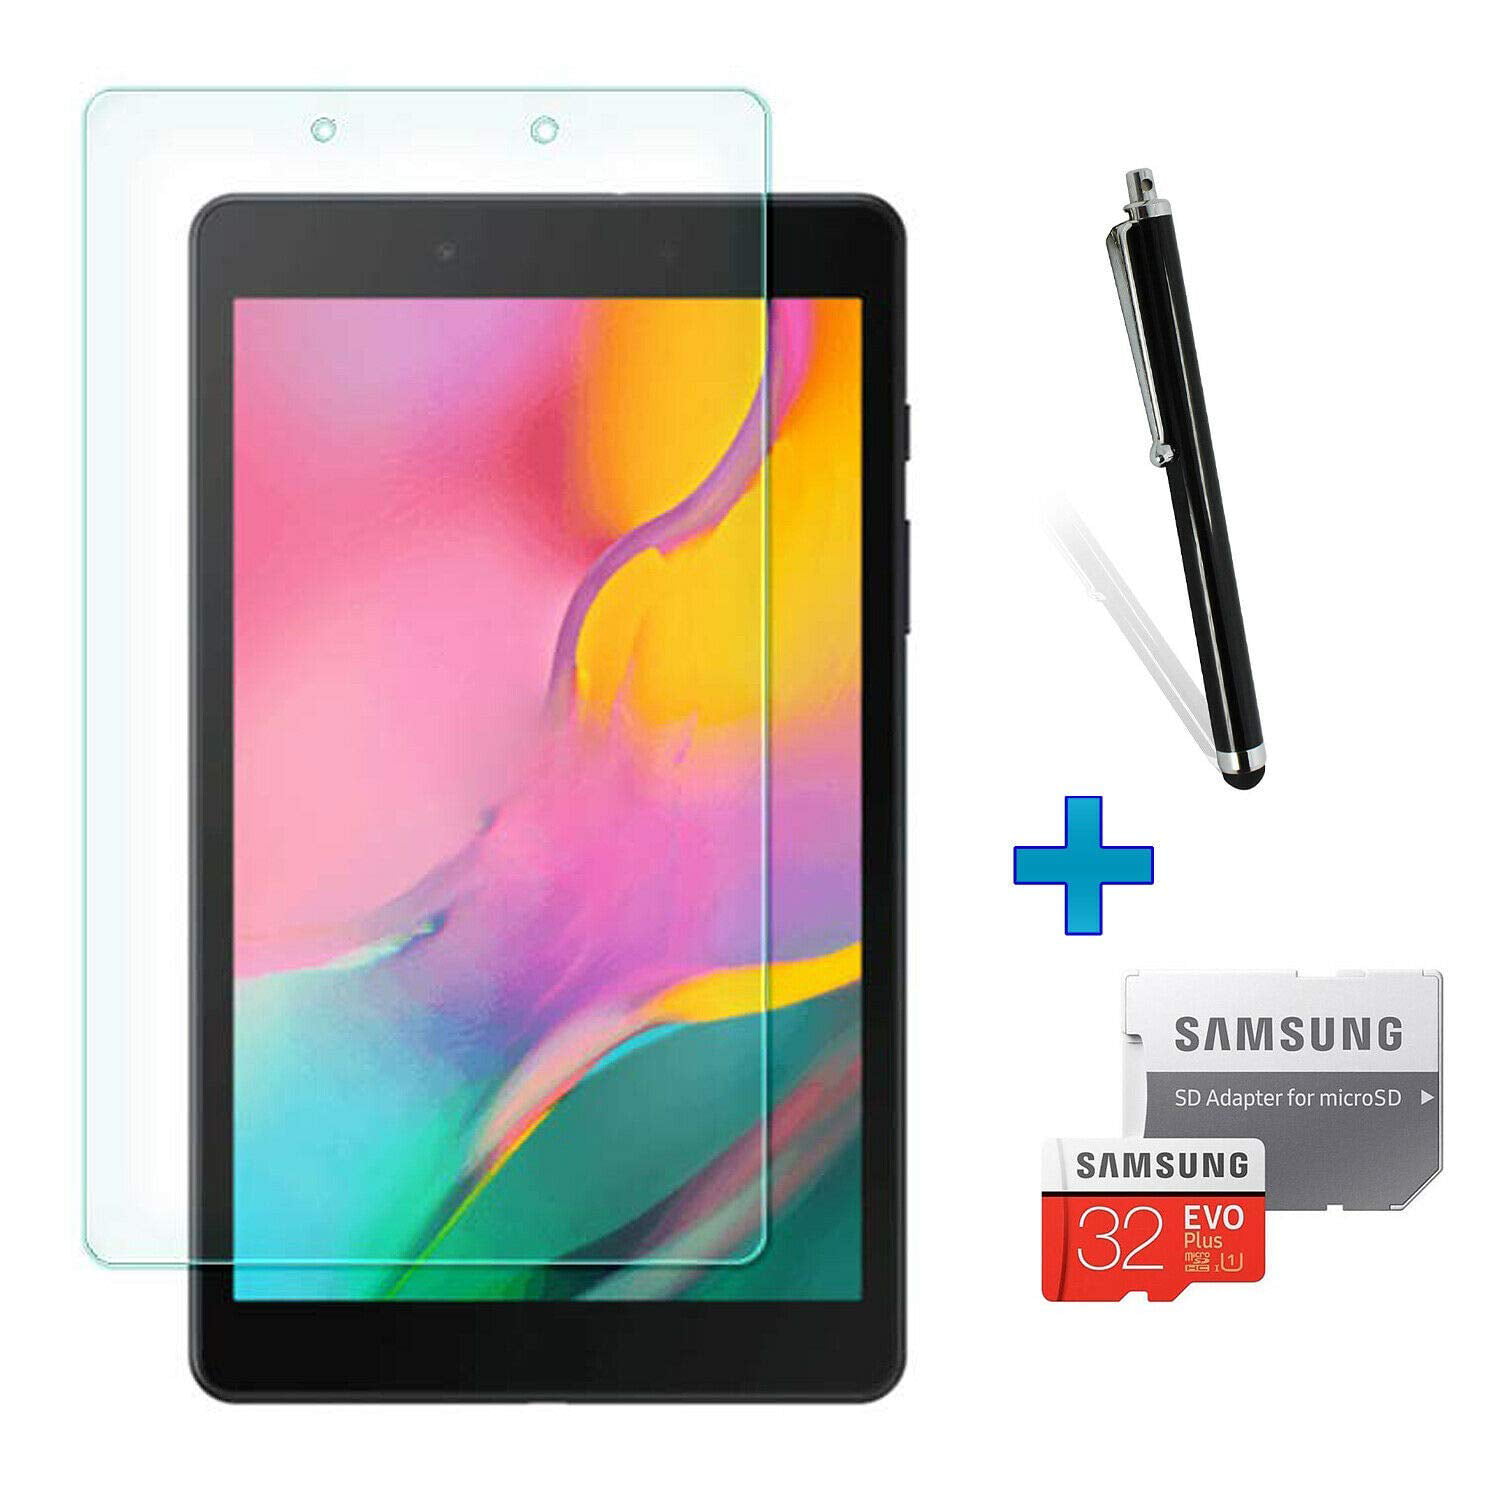 Samsung Galaxy Tab A 8-Inch 32 GB WiFi Tablet Black (2019) International  Version Bundle - Case, Screen Protector, Stylus and 32GB SD Card 